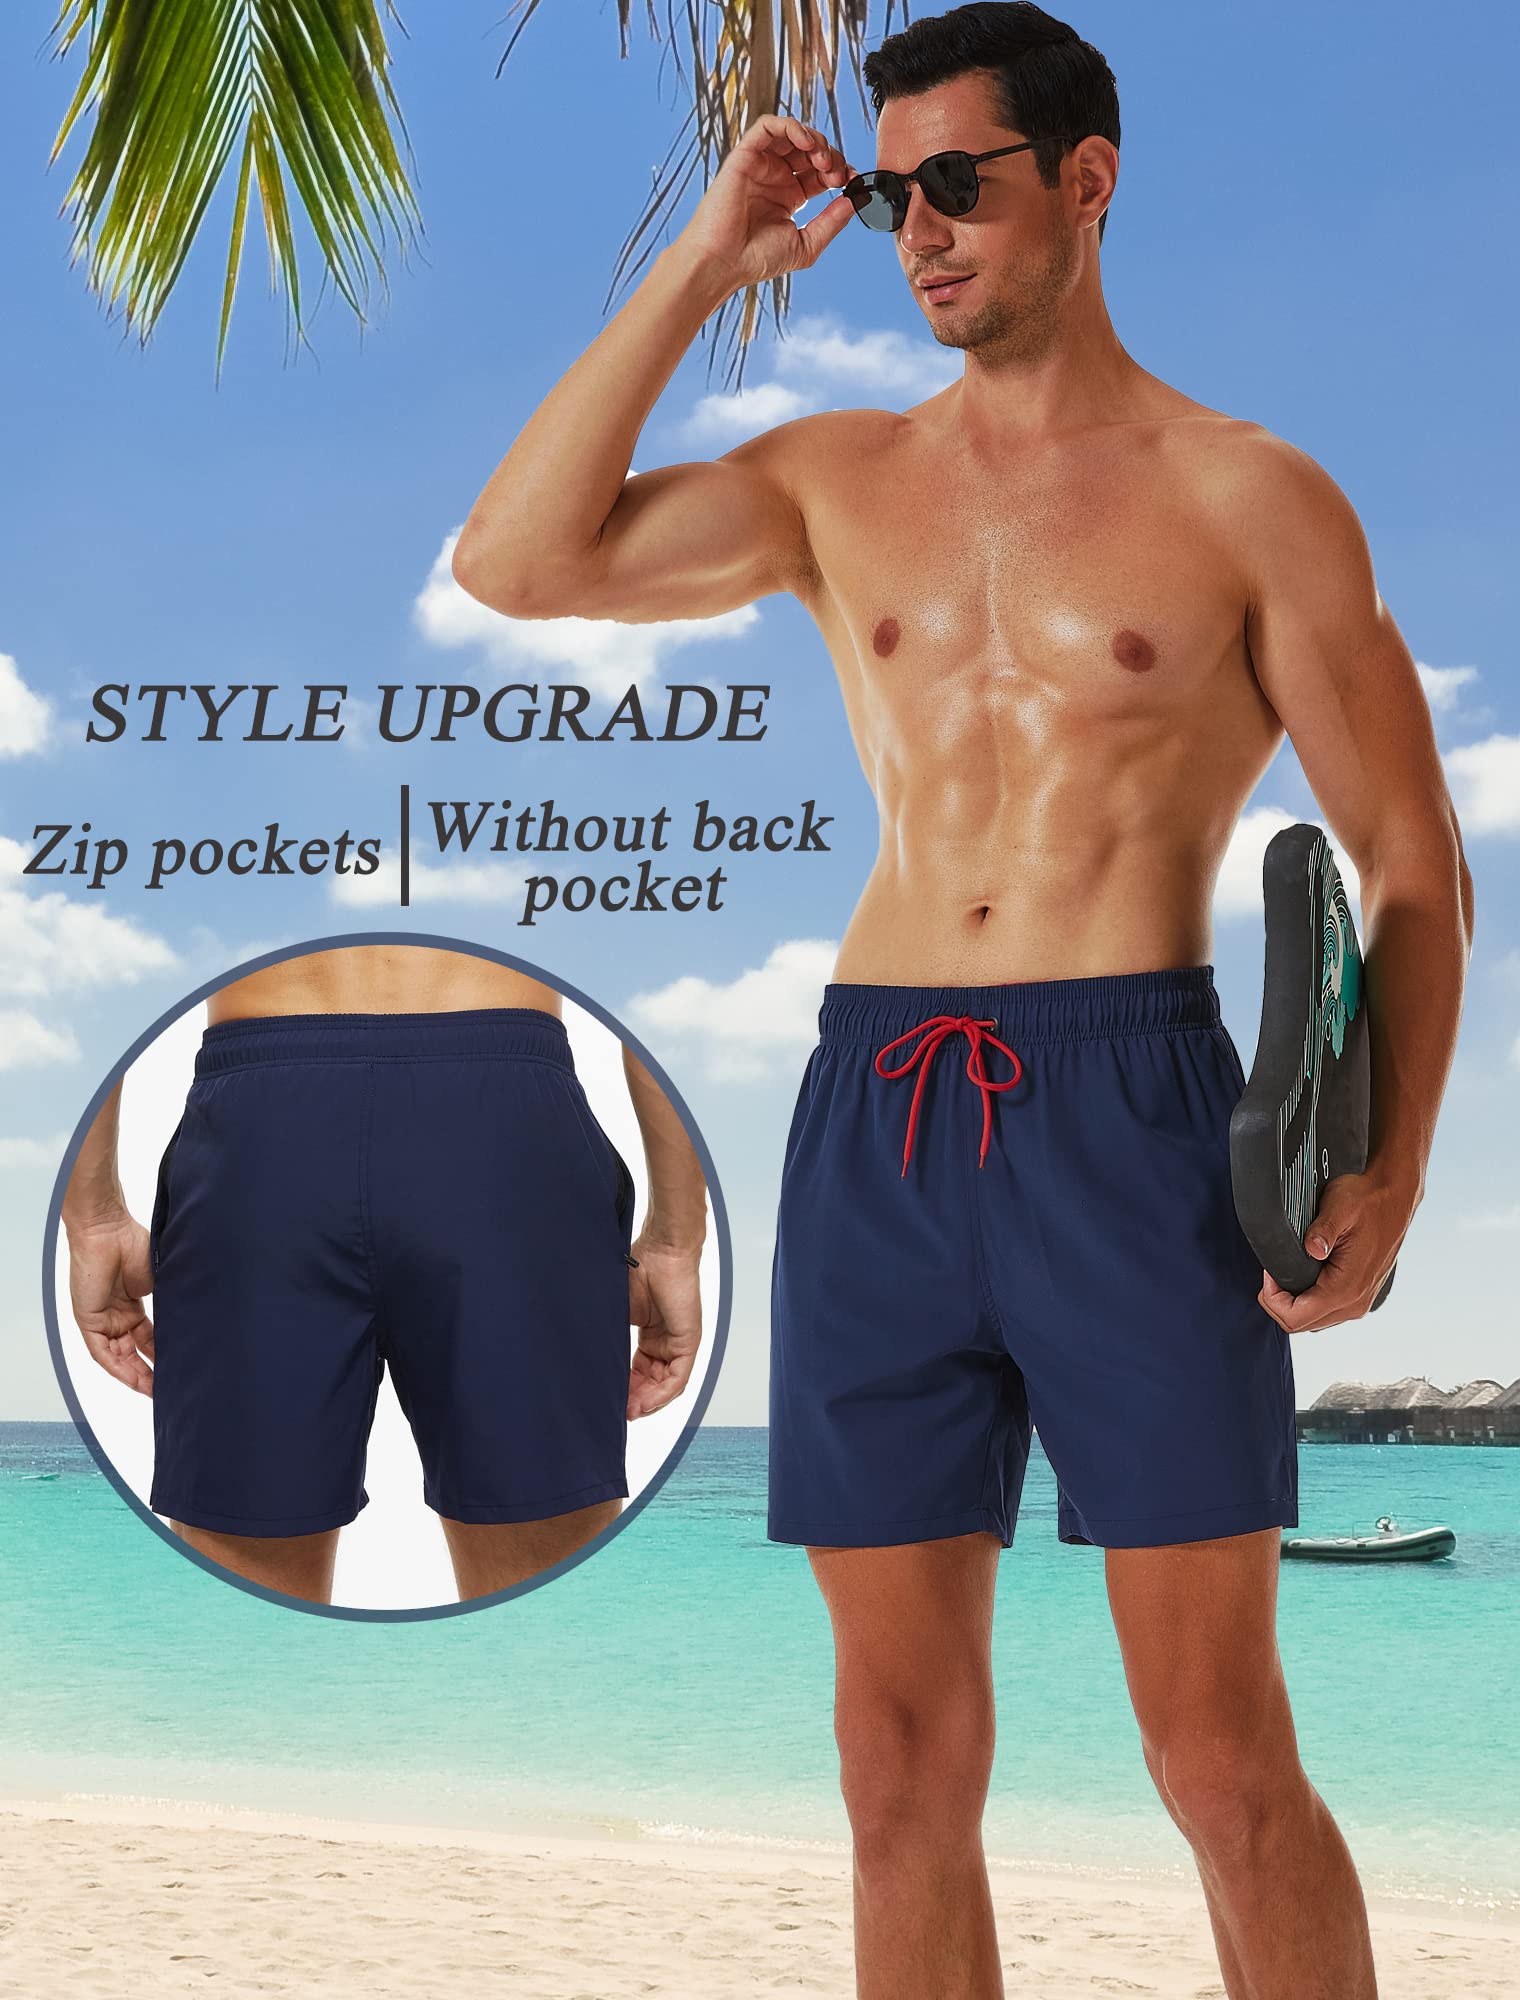 SILKWORLD Men's Swim Trunks Quick Dry Beach Shorts with Pockets 